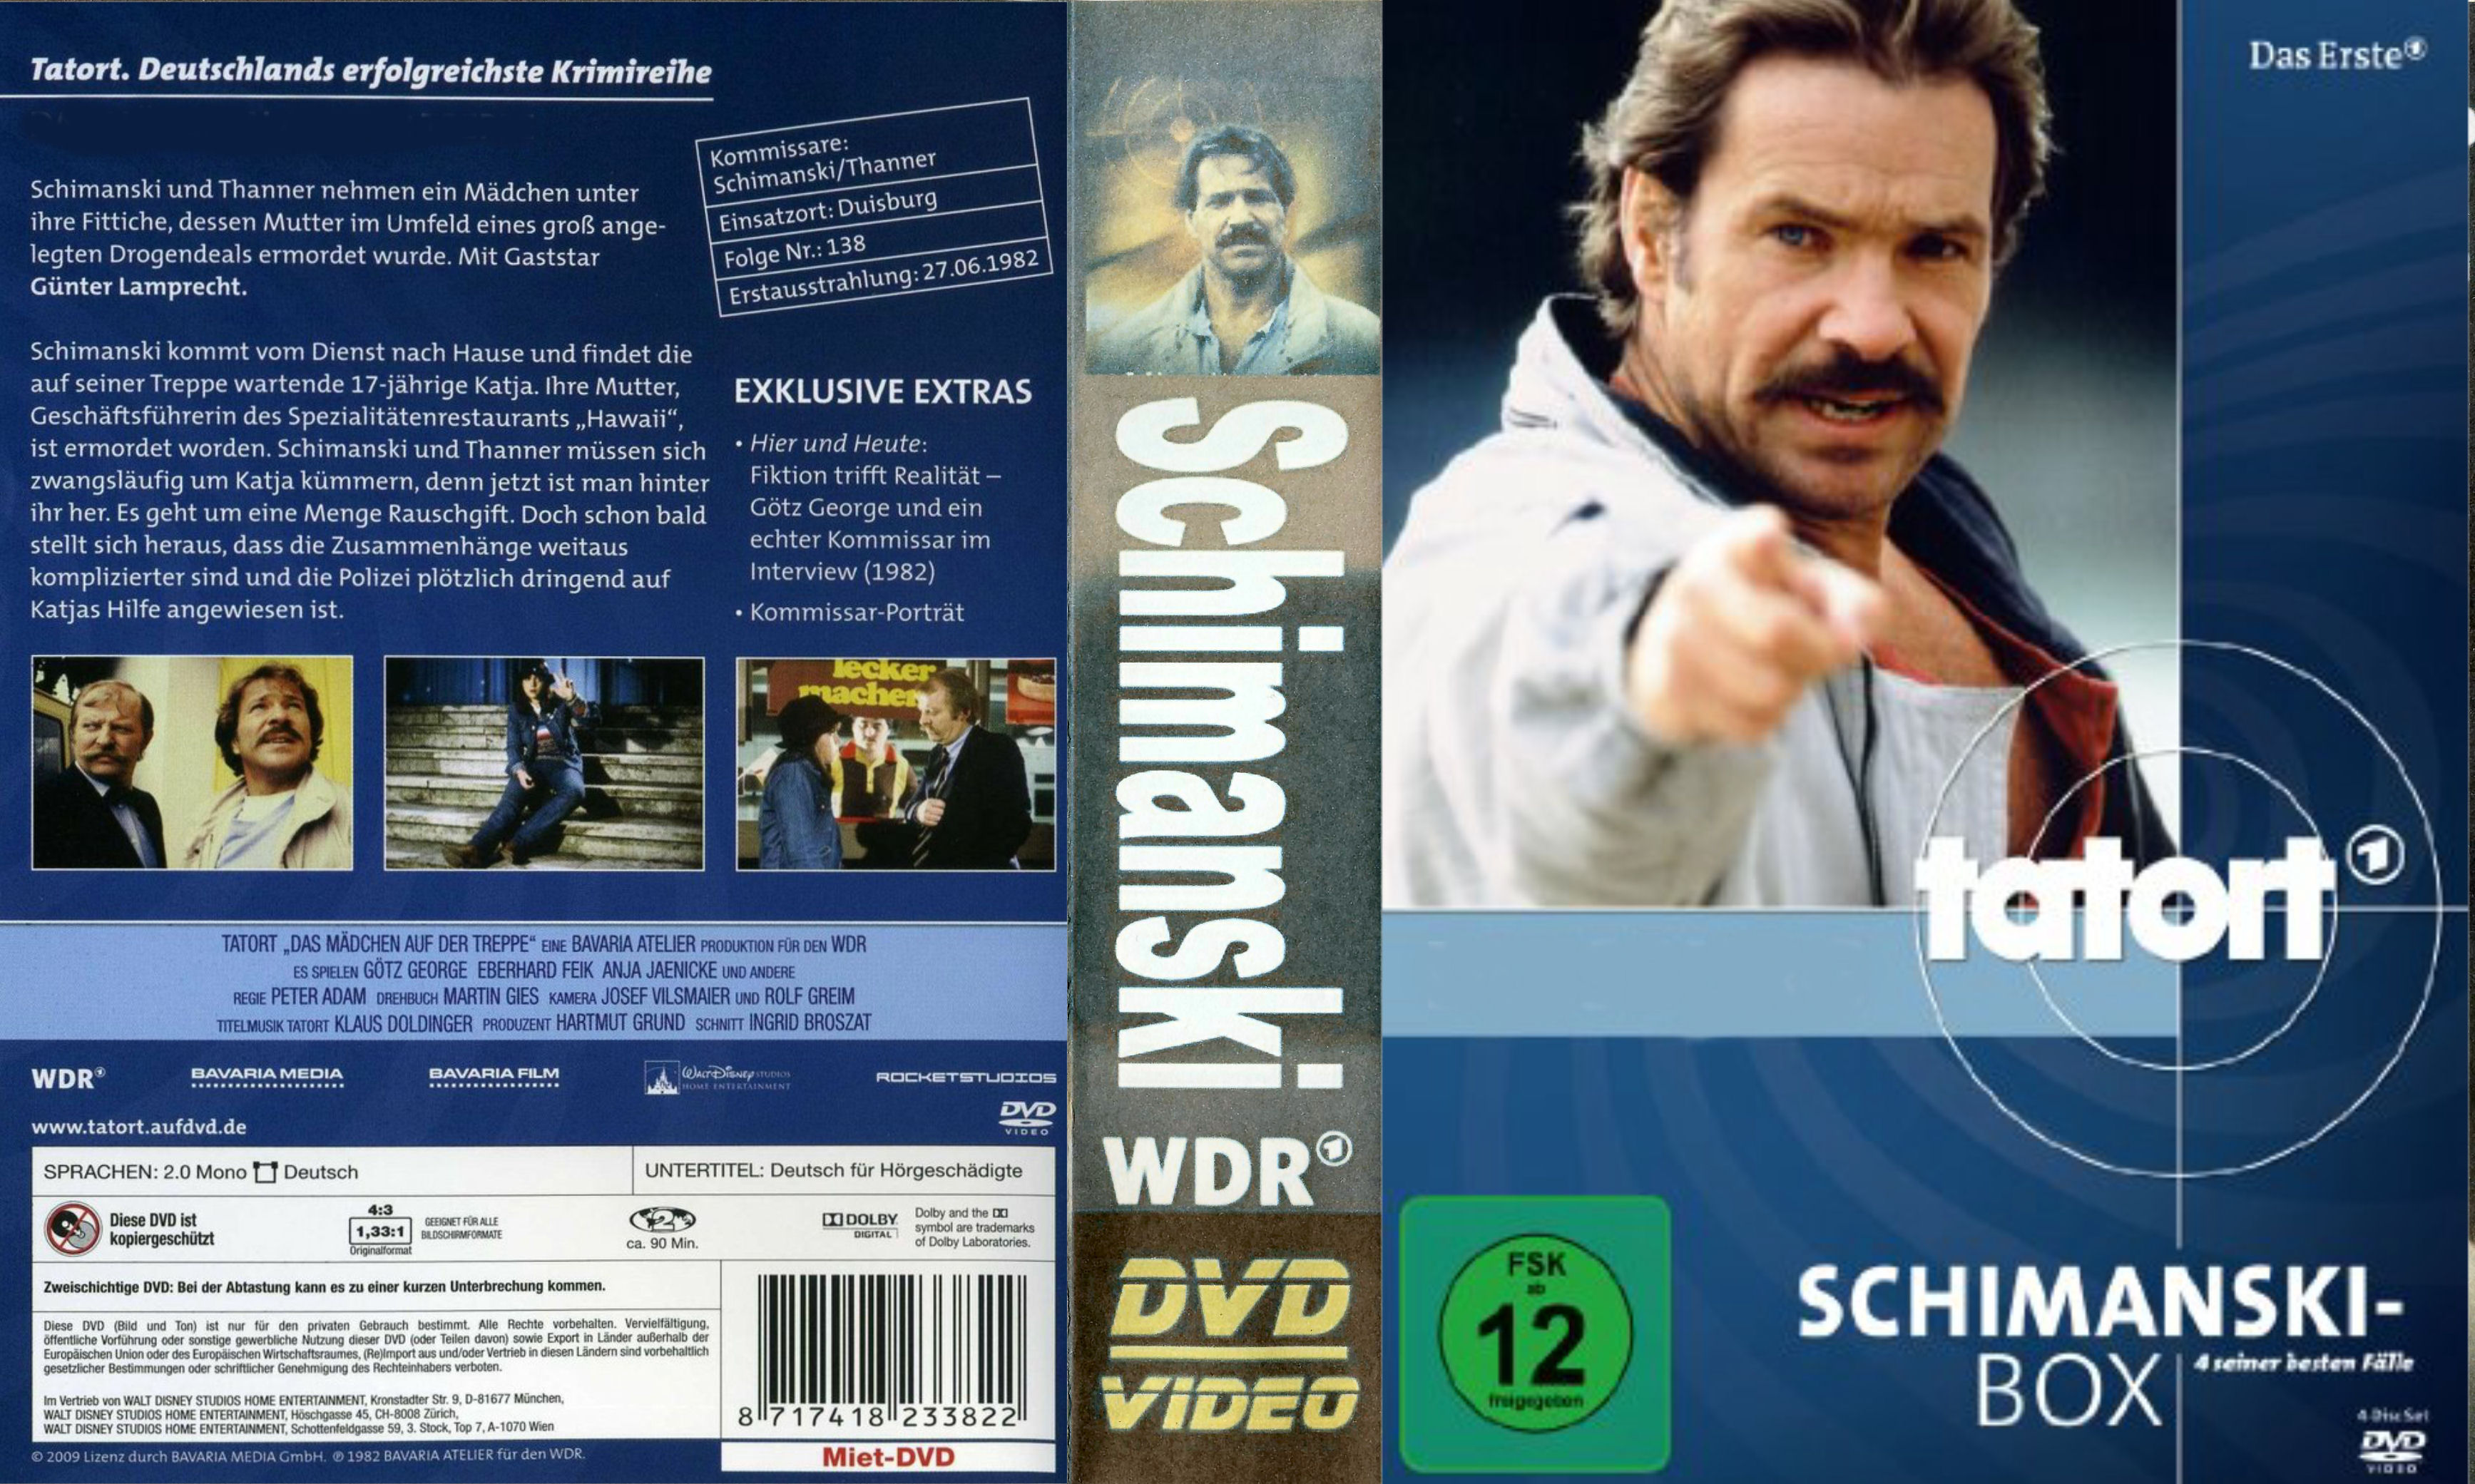 Schimanski Collectie Tatort No Subs - DvD 4